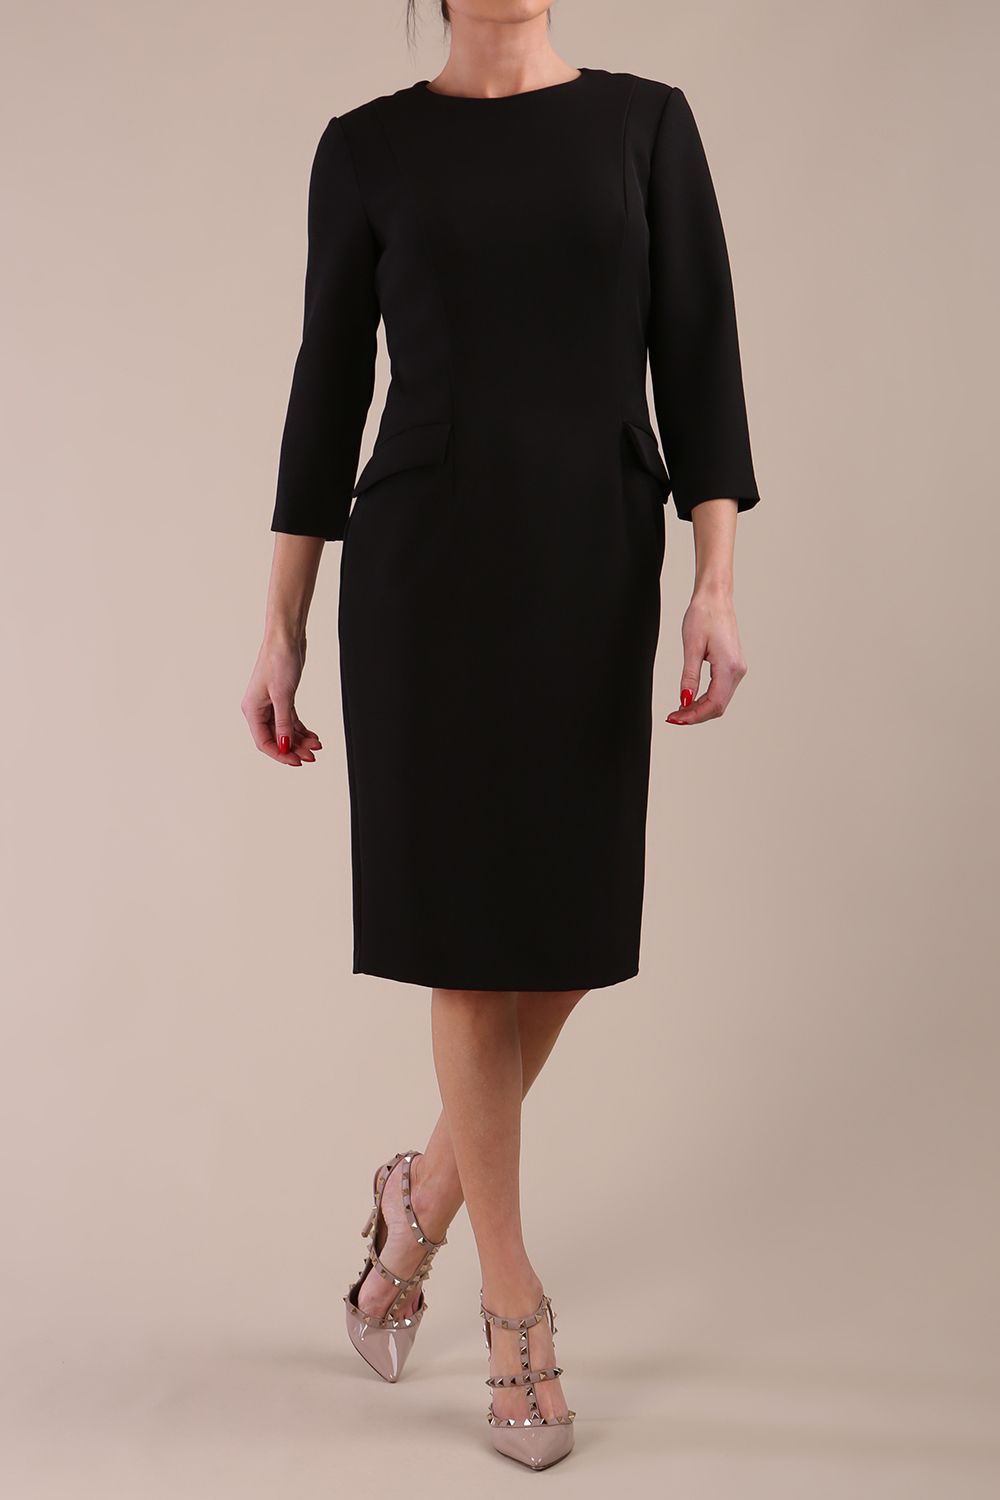 Model wearing diva catwalk Elsinor 3/4 Sleeve pencil skirt dress with two side pockets front  in Black